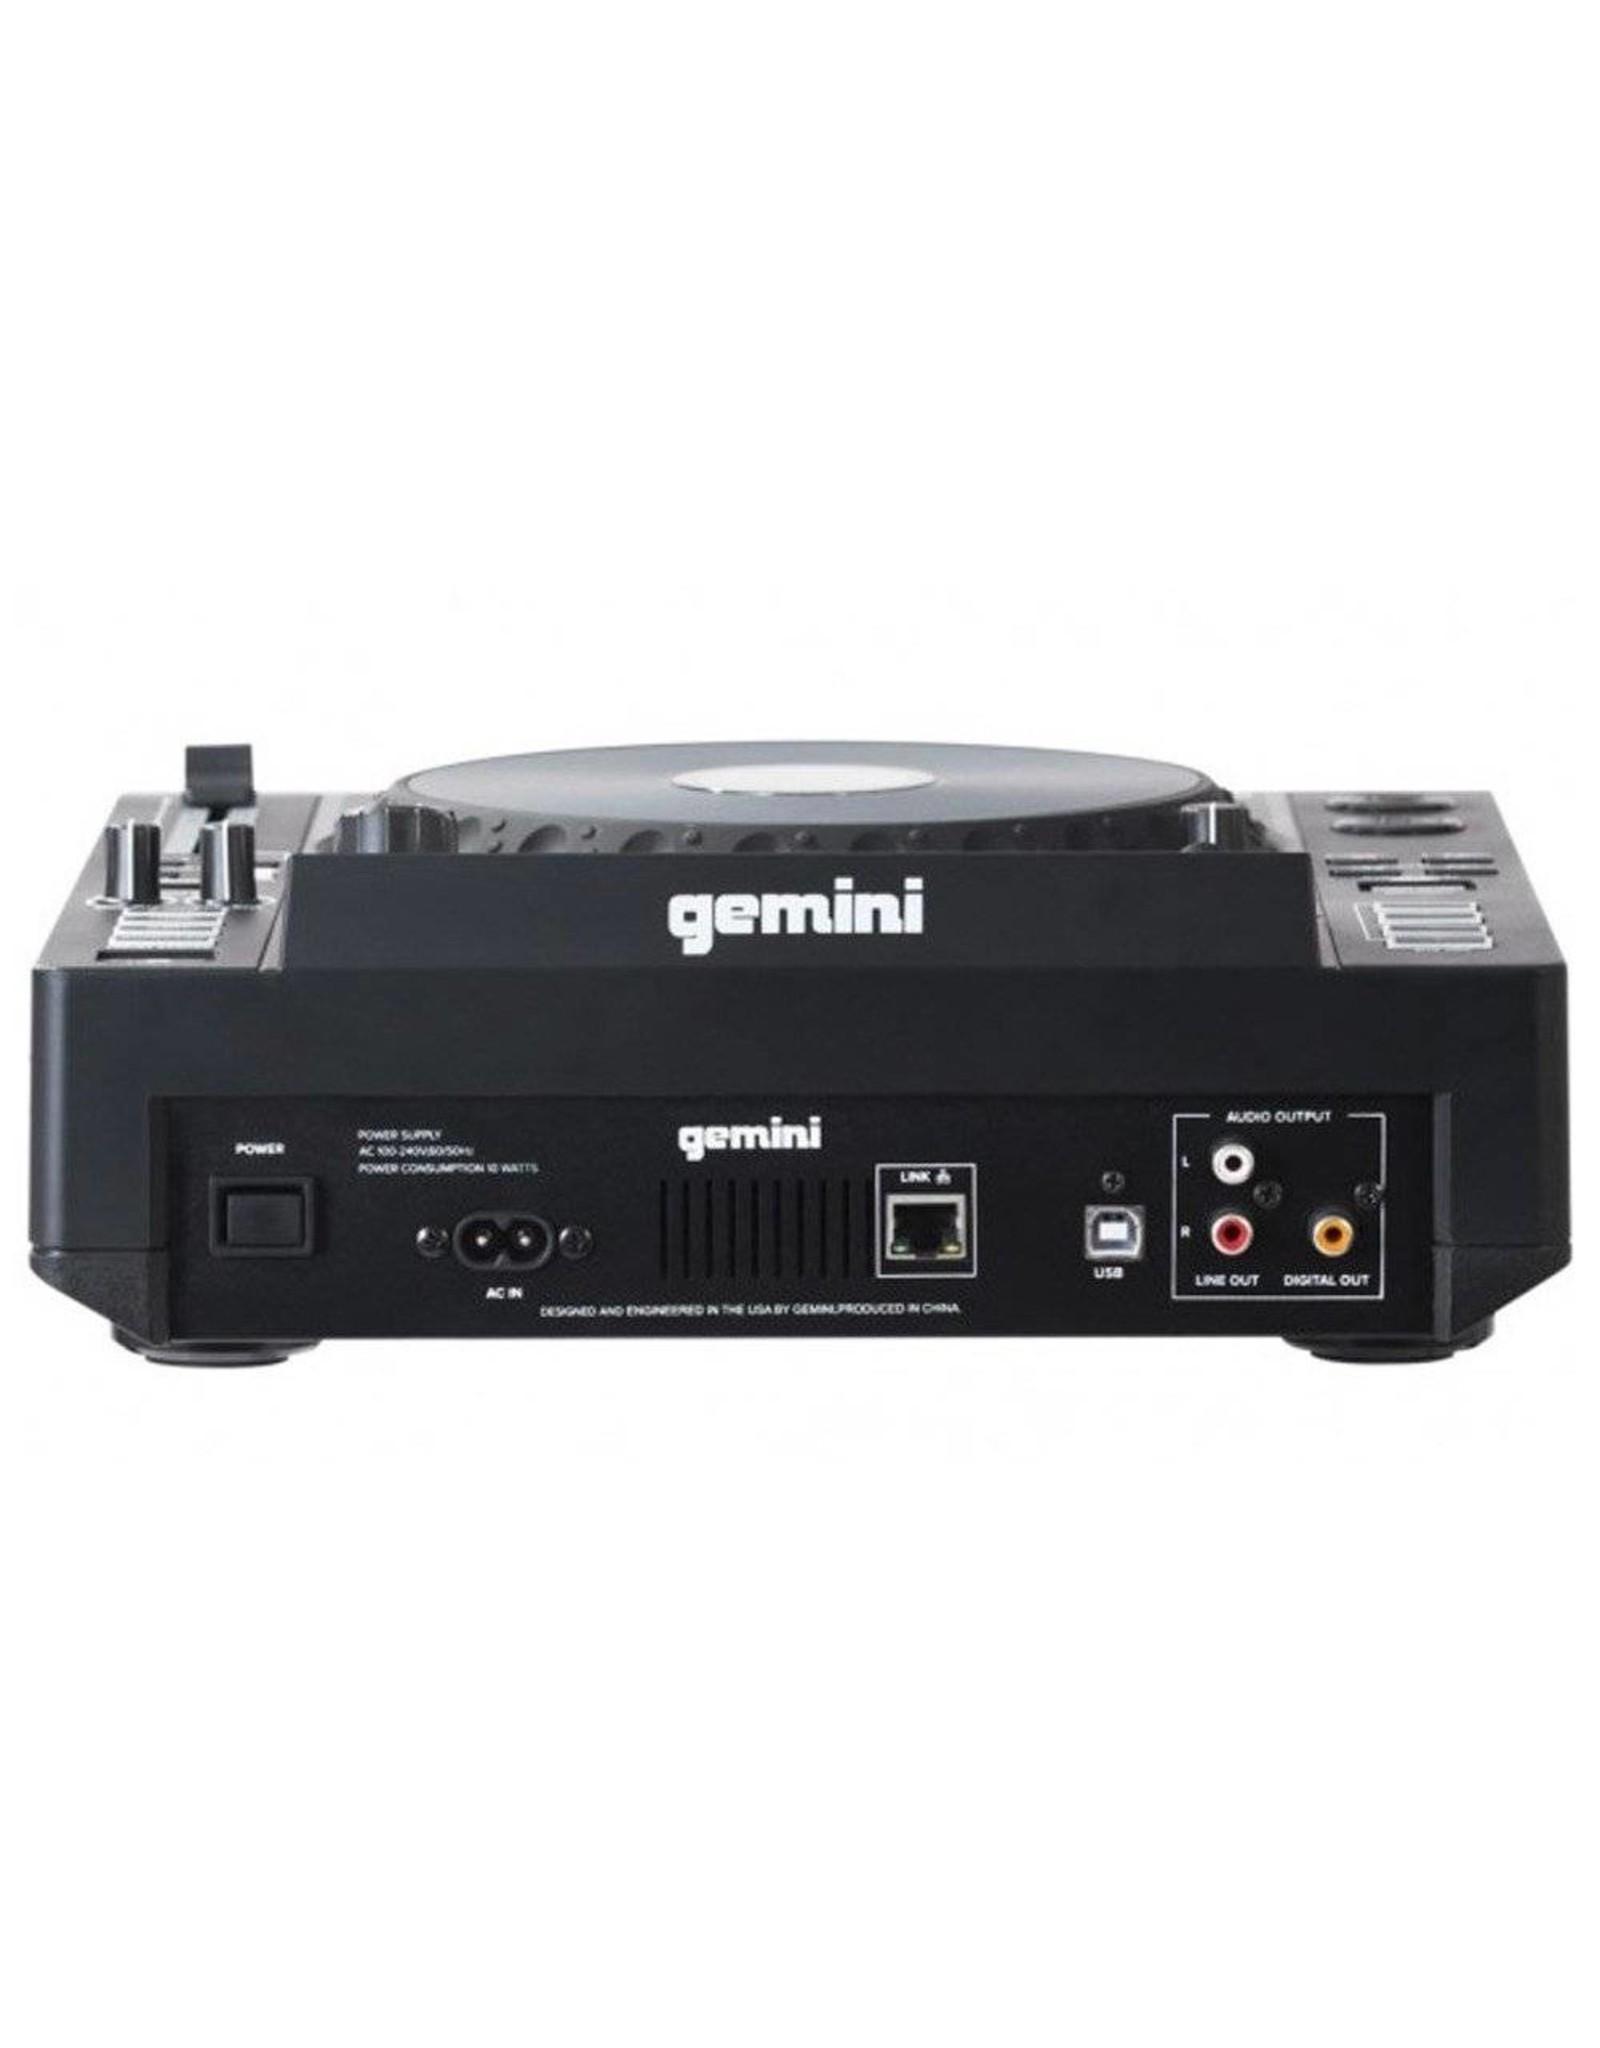 Gemini MDJ-900-Tablet auf einem USB-Media-Player